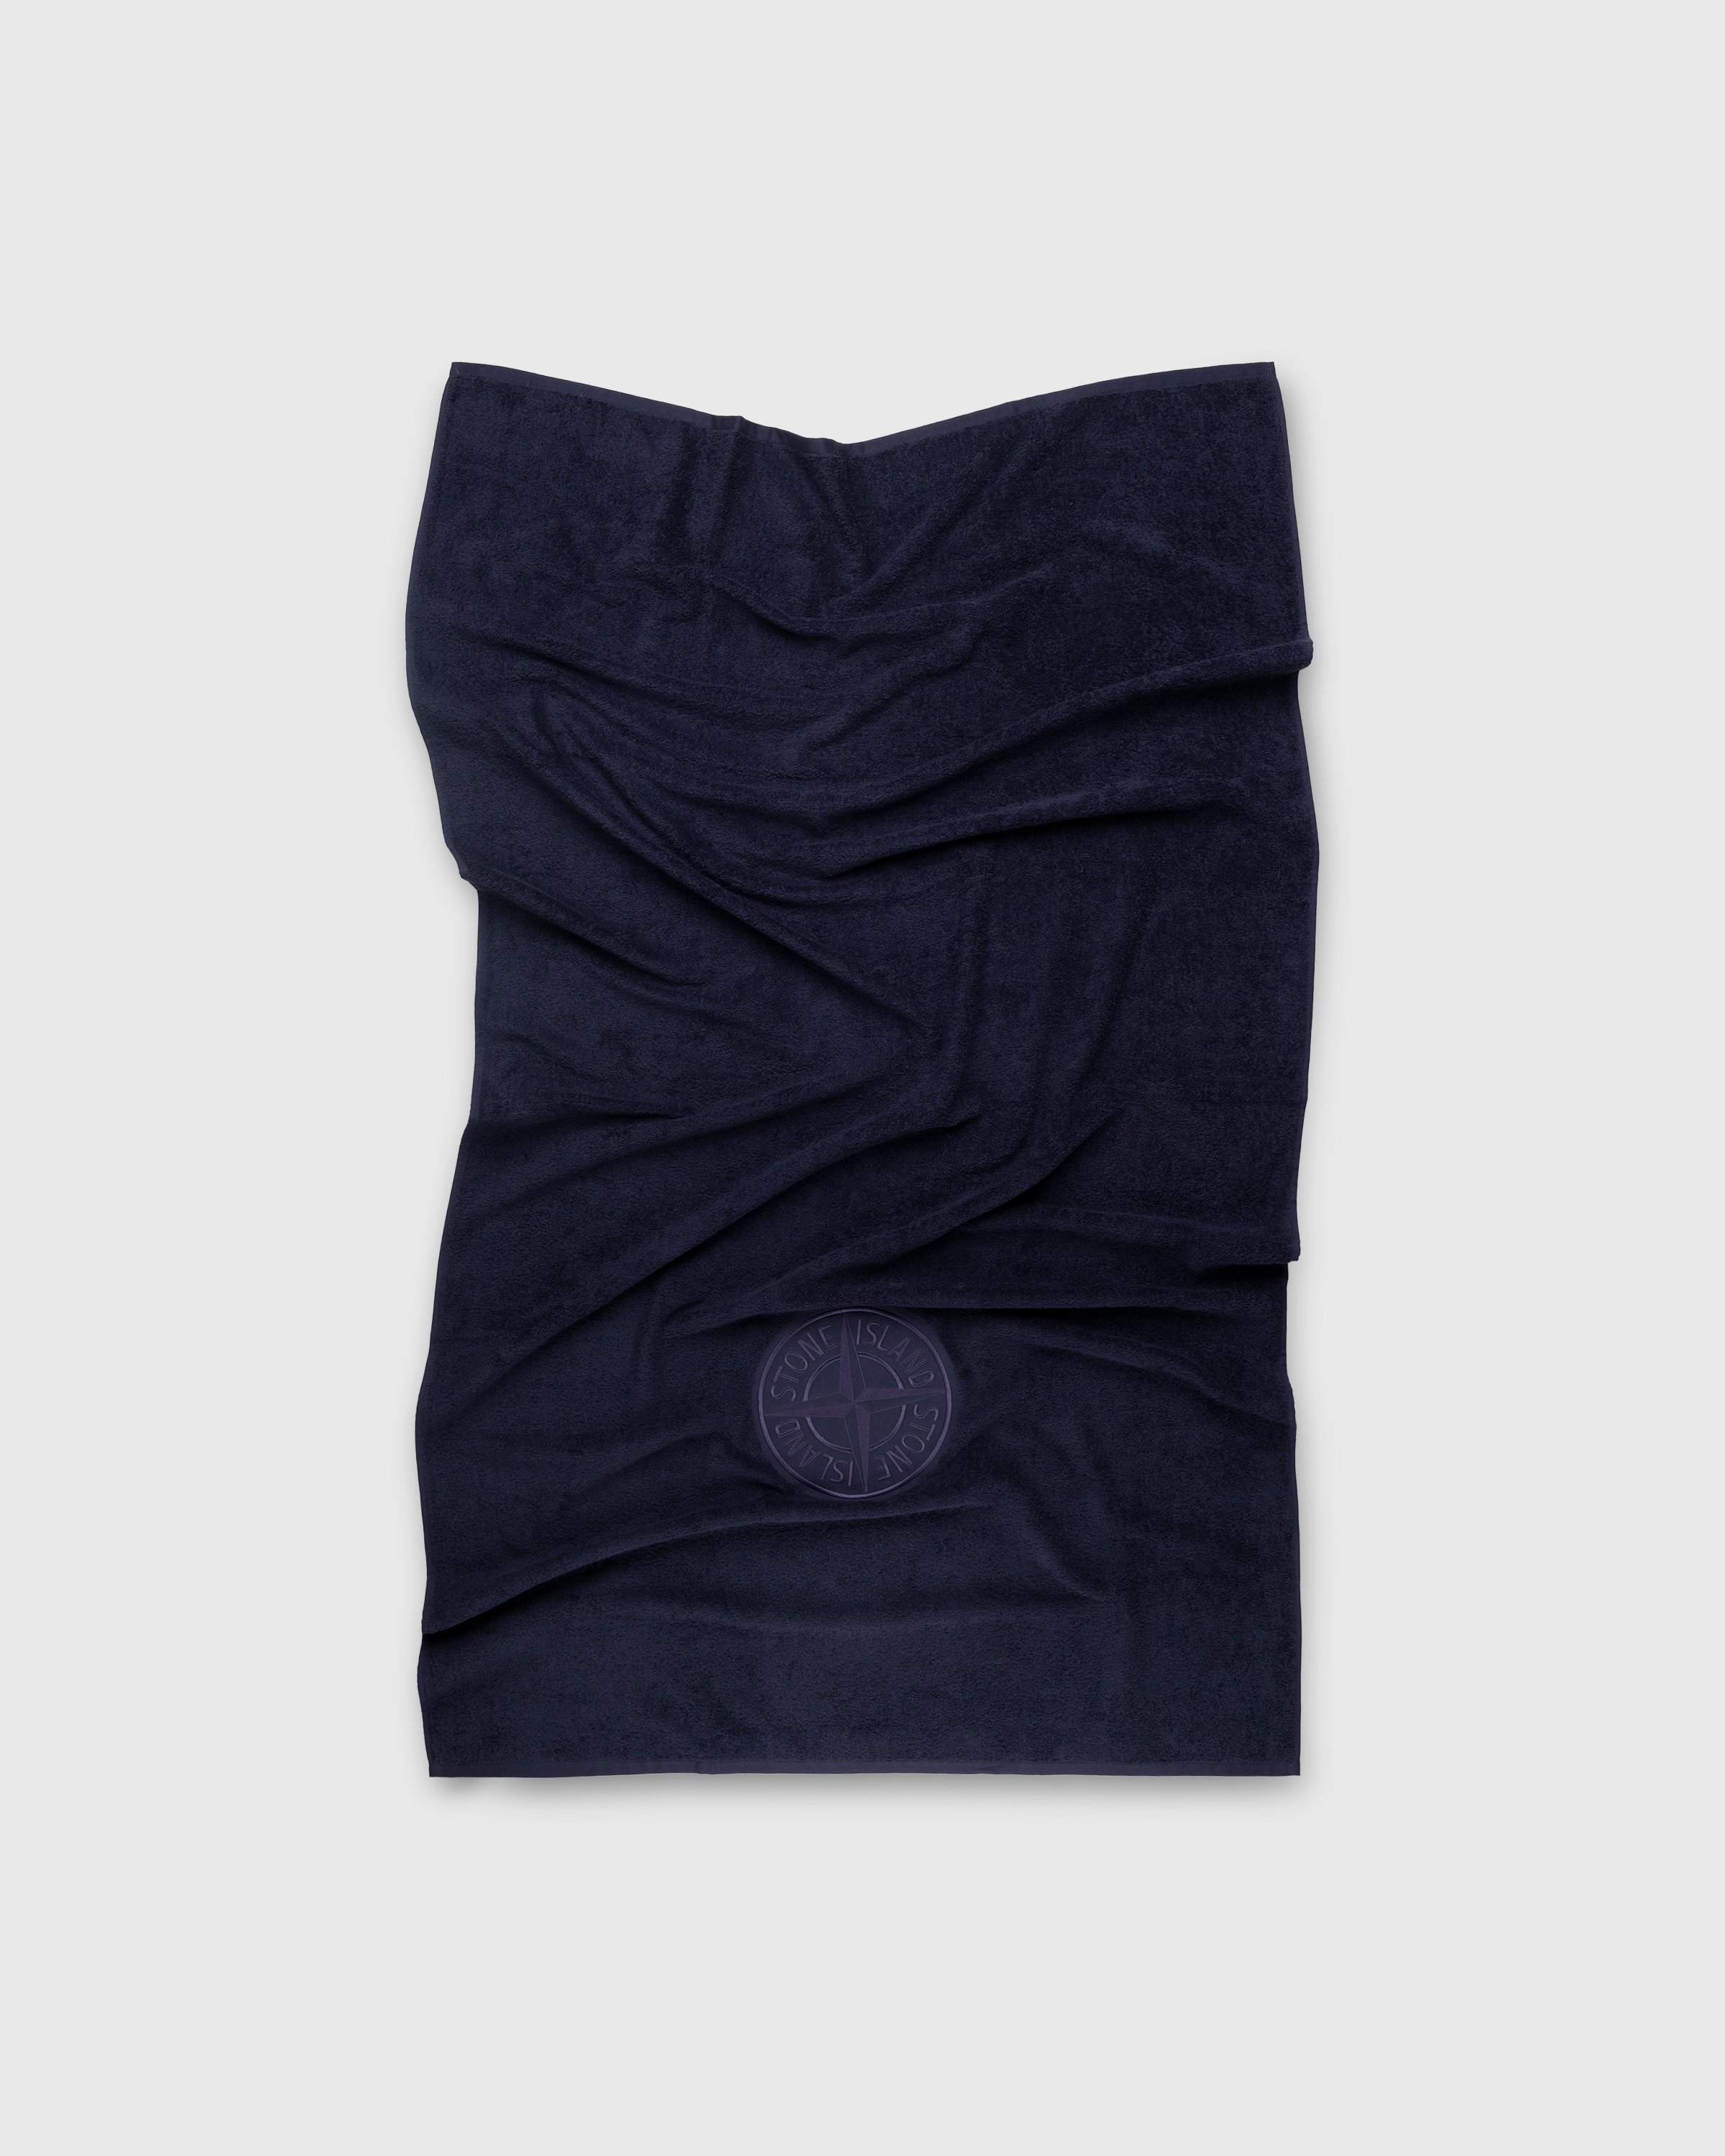 Stone Island - 93466 Logo Beach Towel With Nylon Bag Royal - Lifestyle - Blue - Image 1